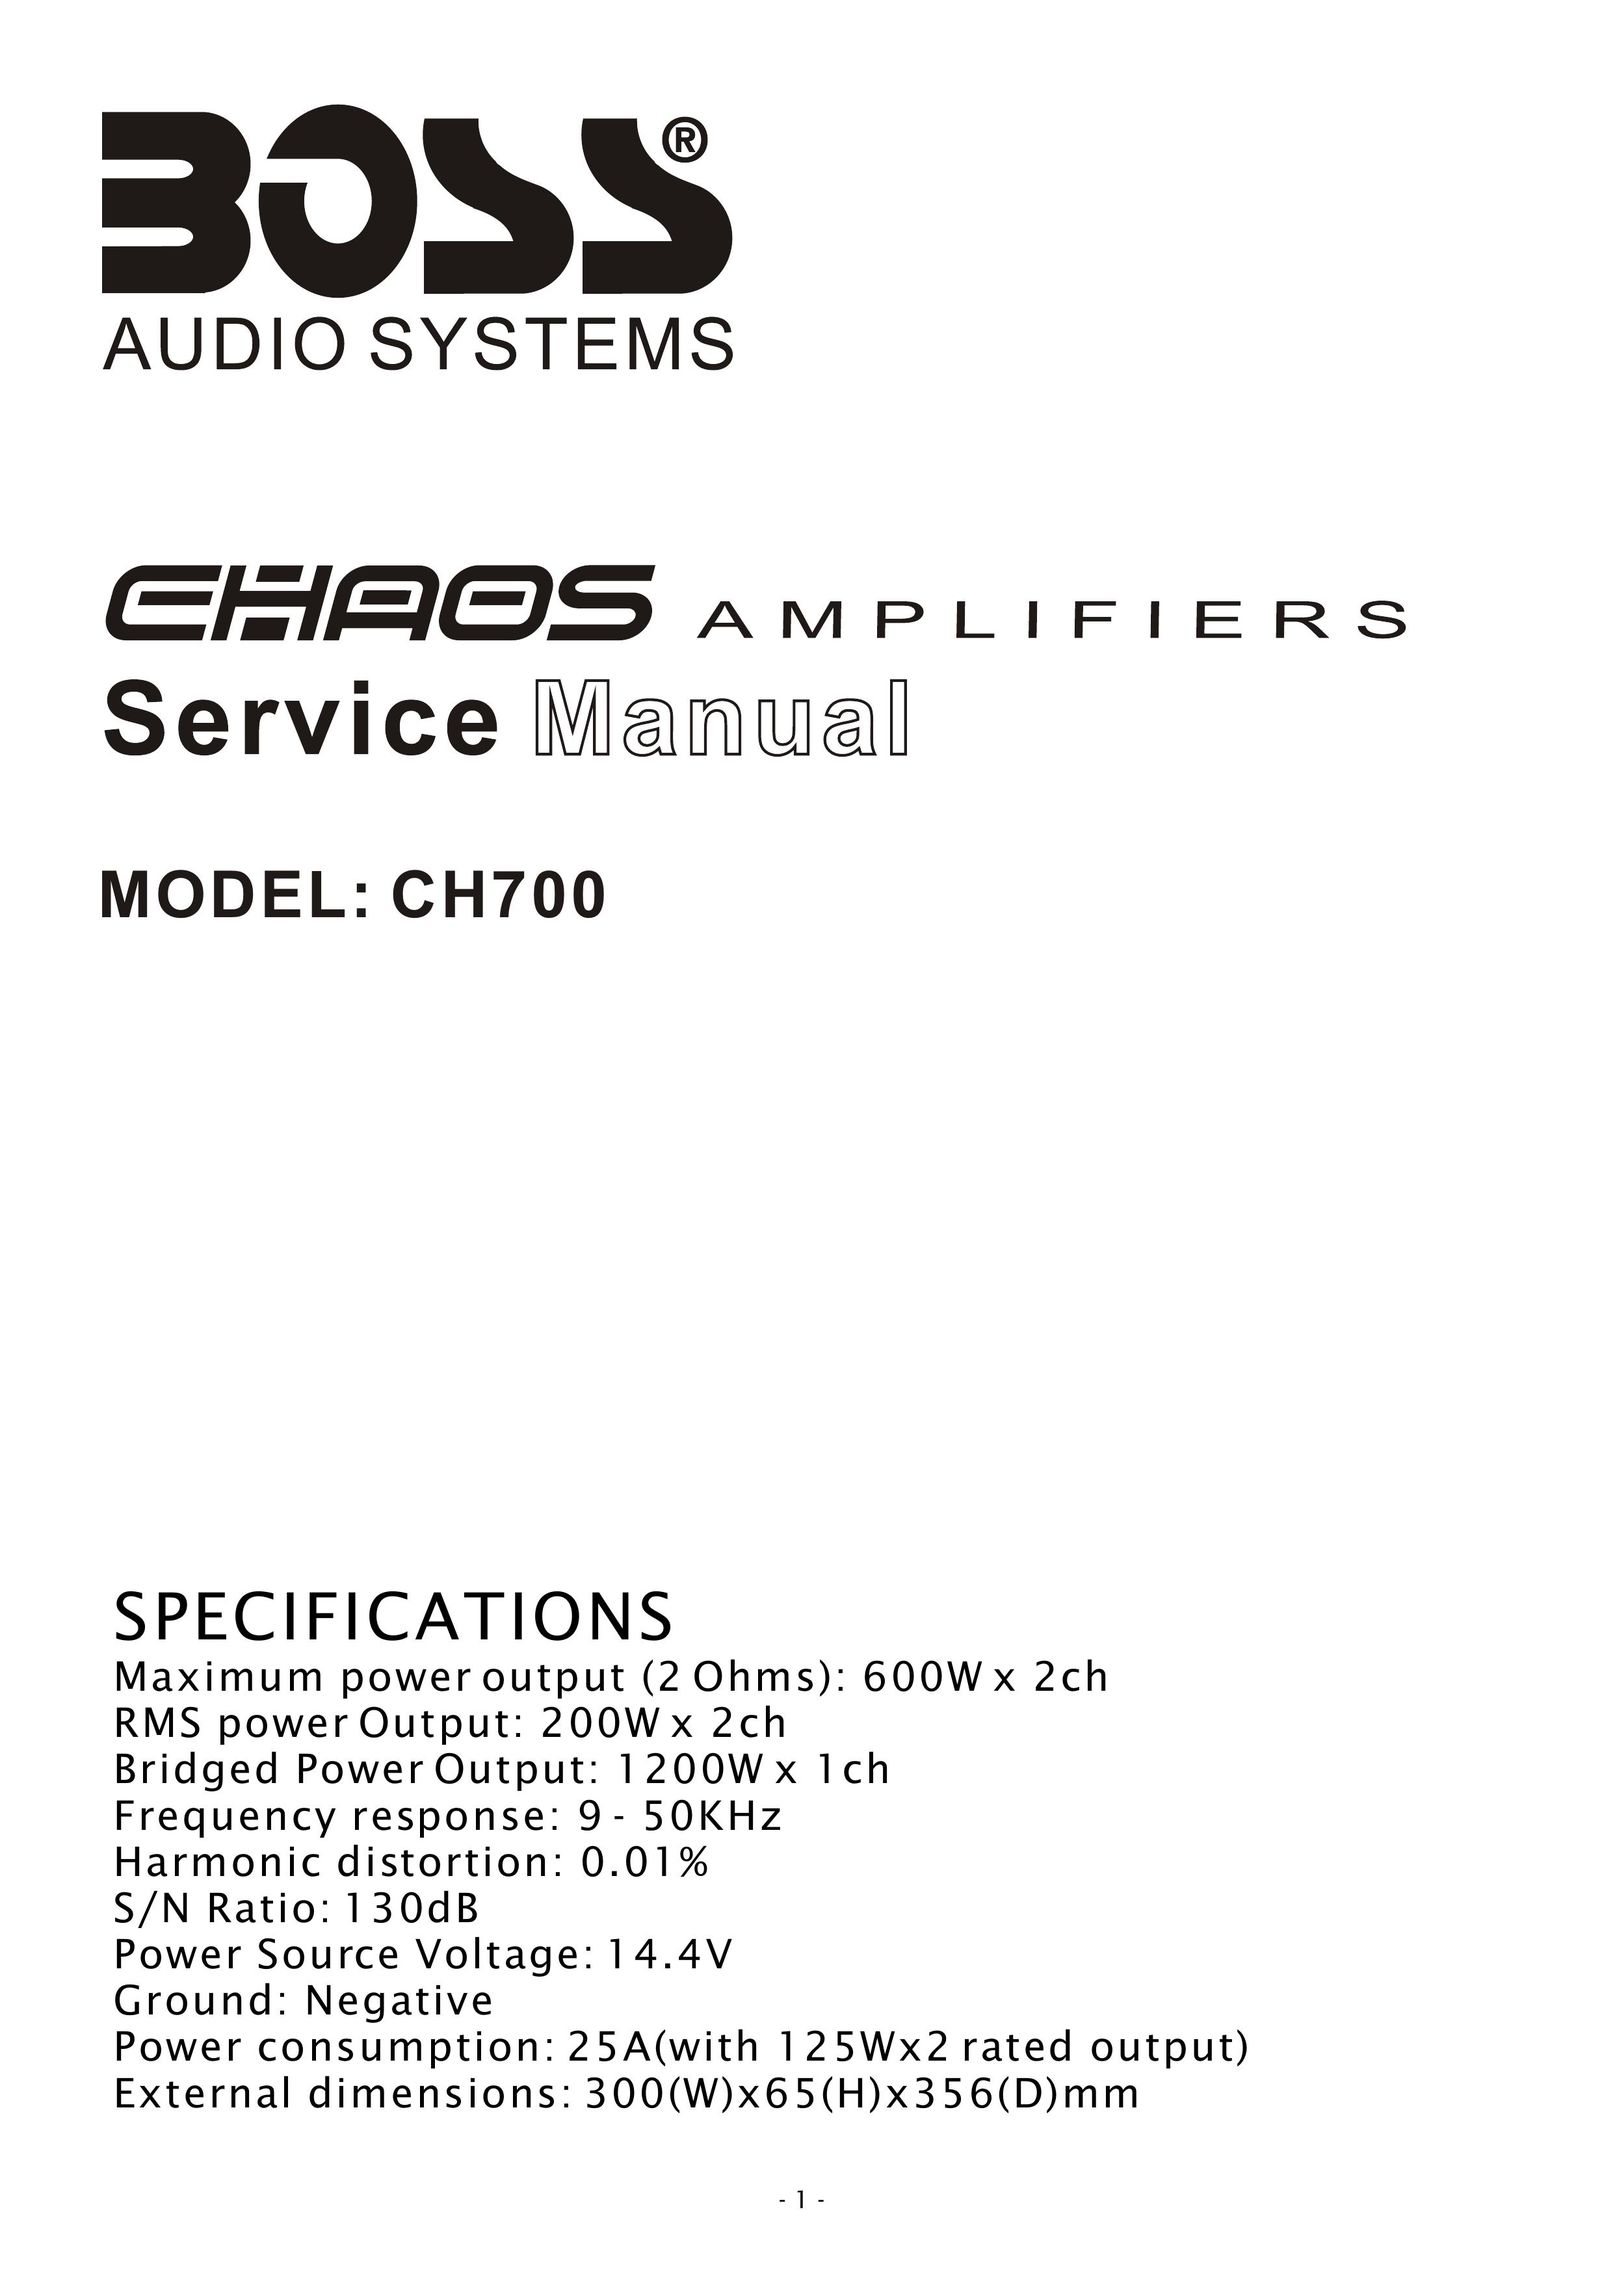 Boss Audio Systems CH700 Car Amplifier User Manual